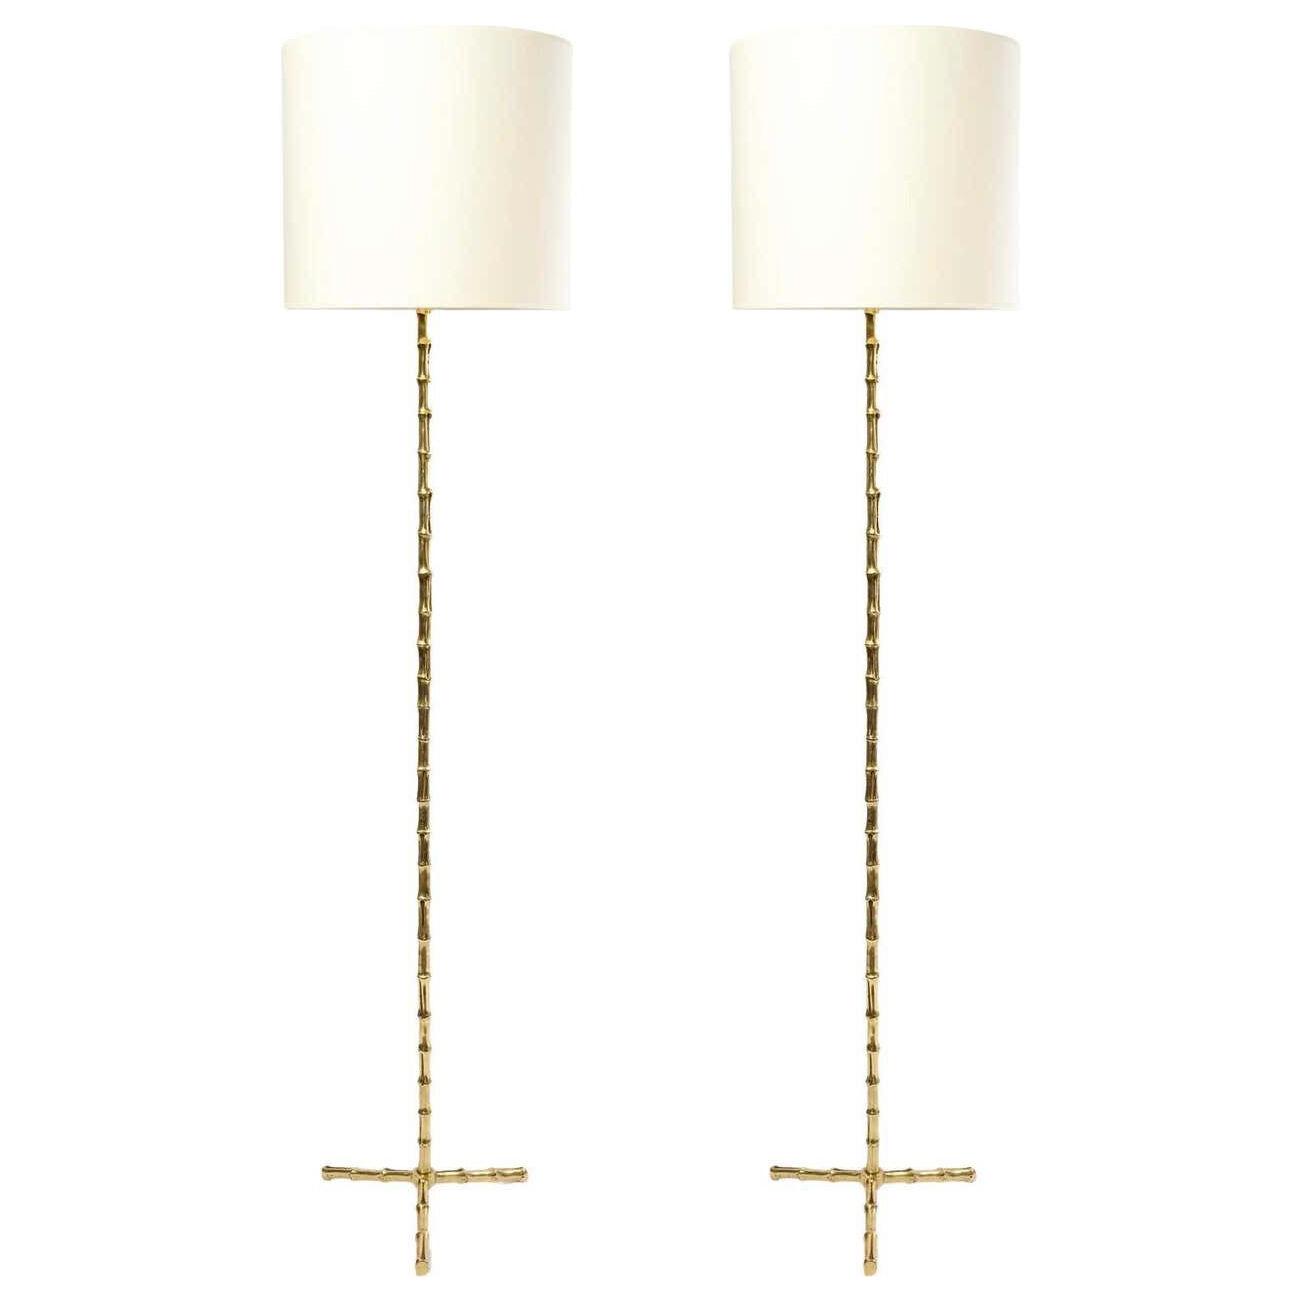 1950 Pair of Floor Lamps "Bamboo" Model in Gilt Bronze Maison Baguès